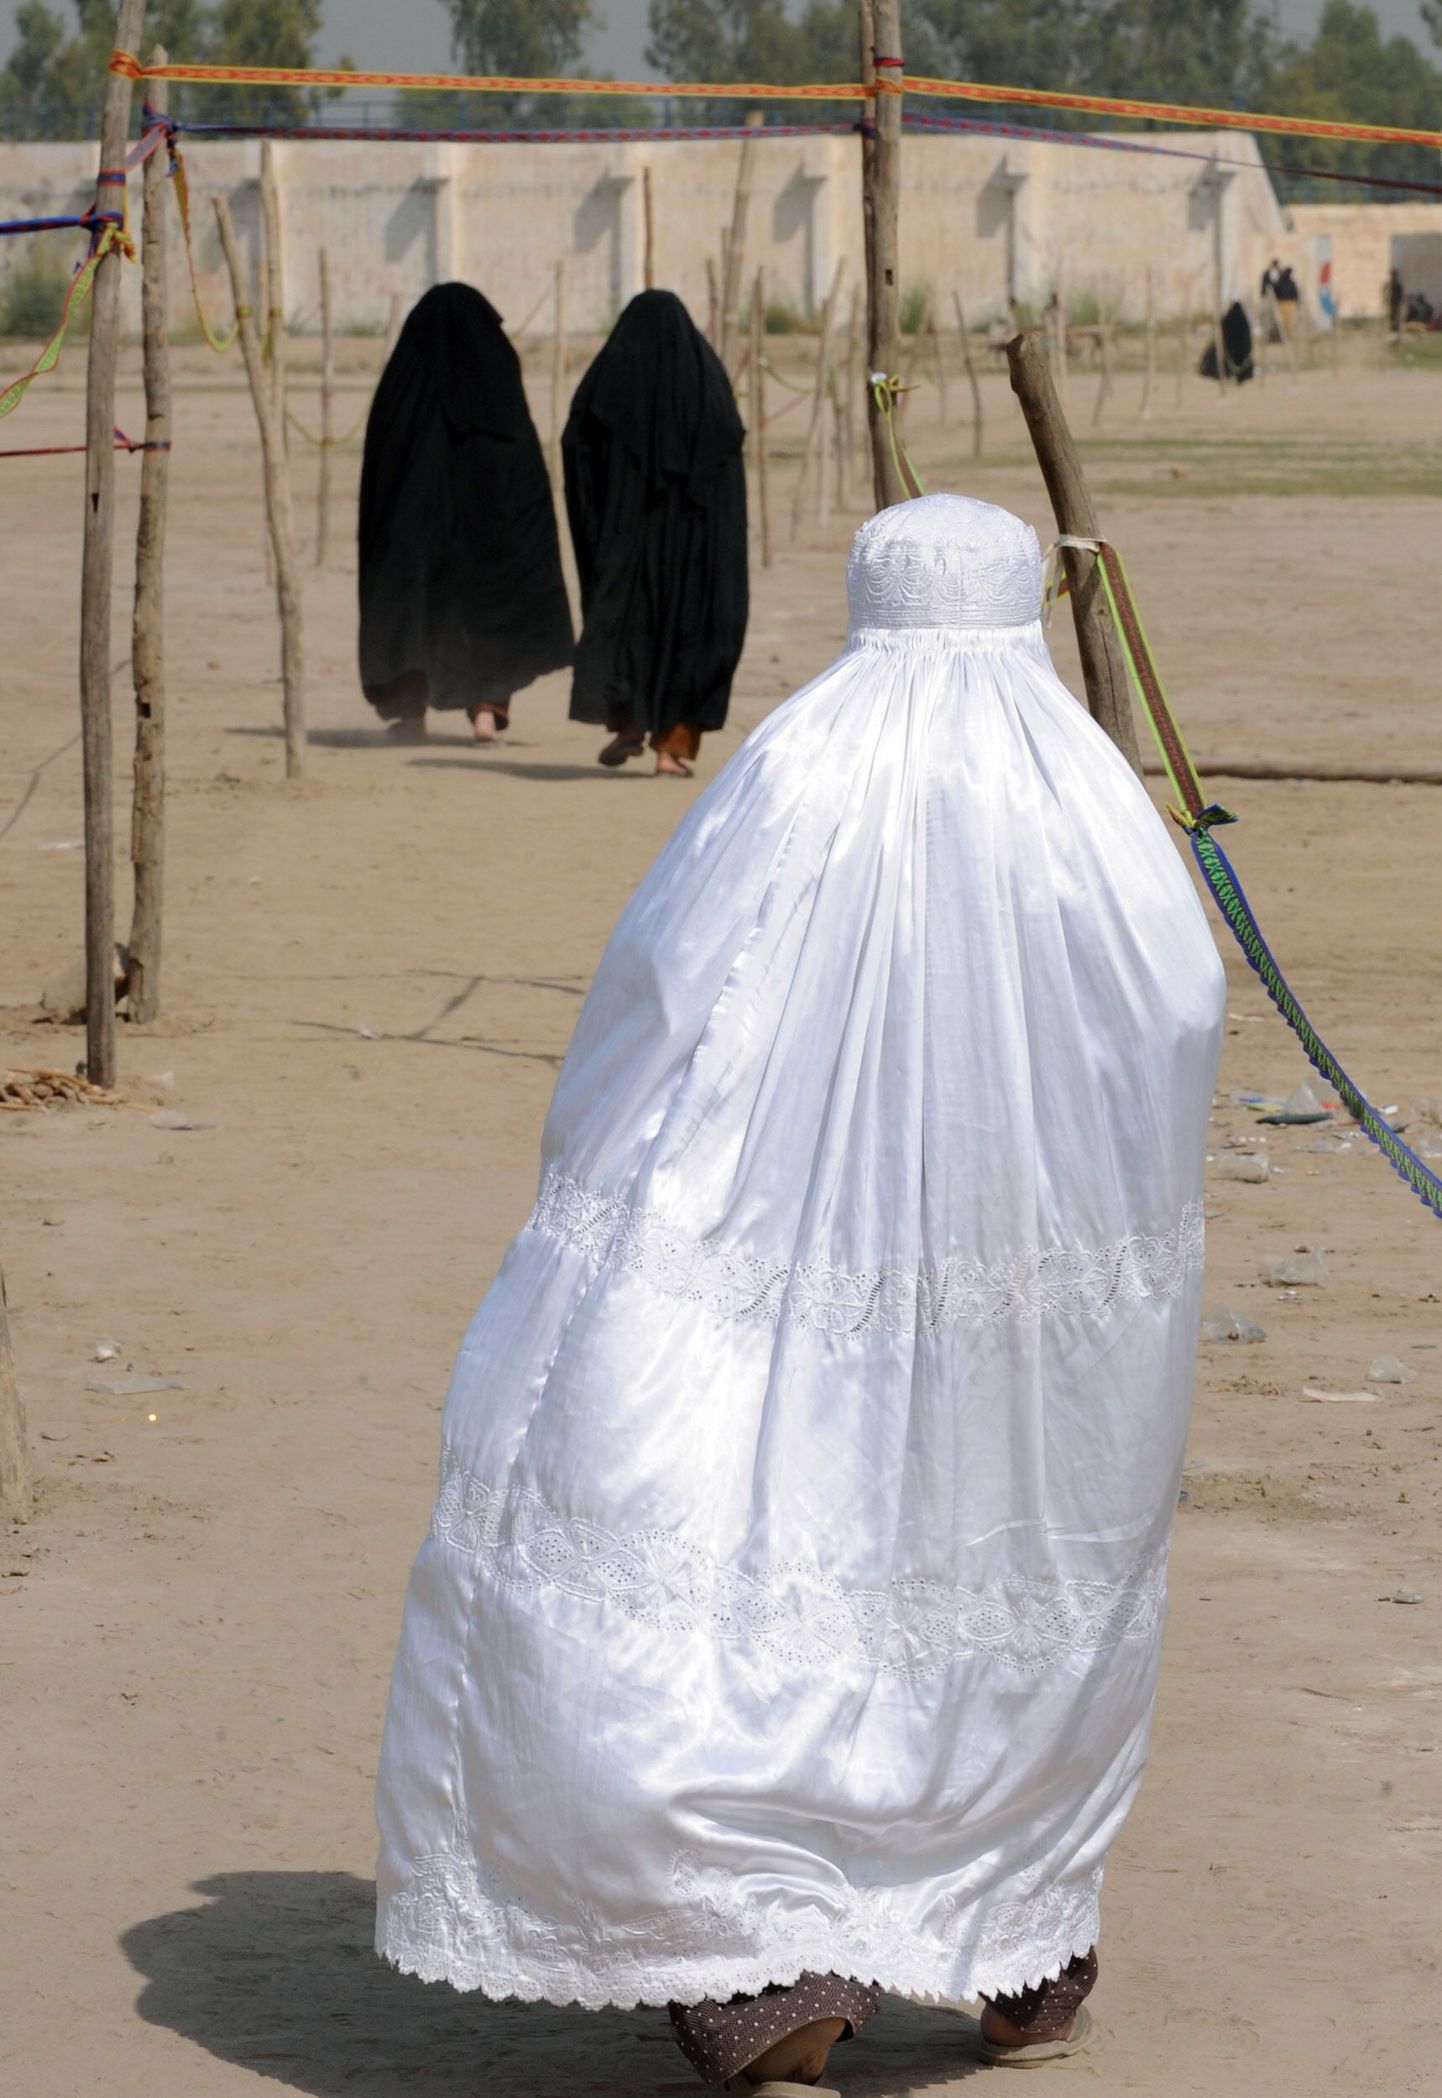 Burkaga kaetud Pakistani naine.